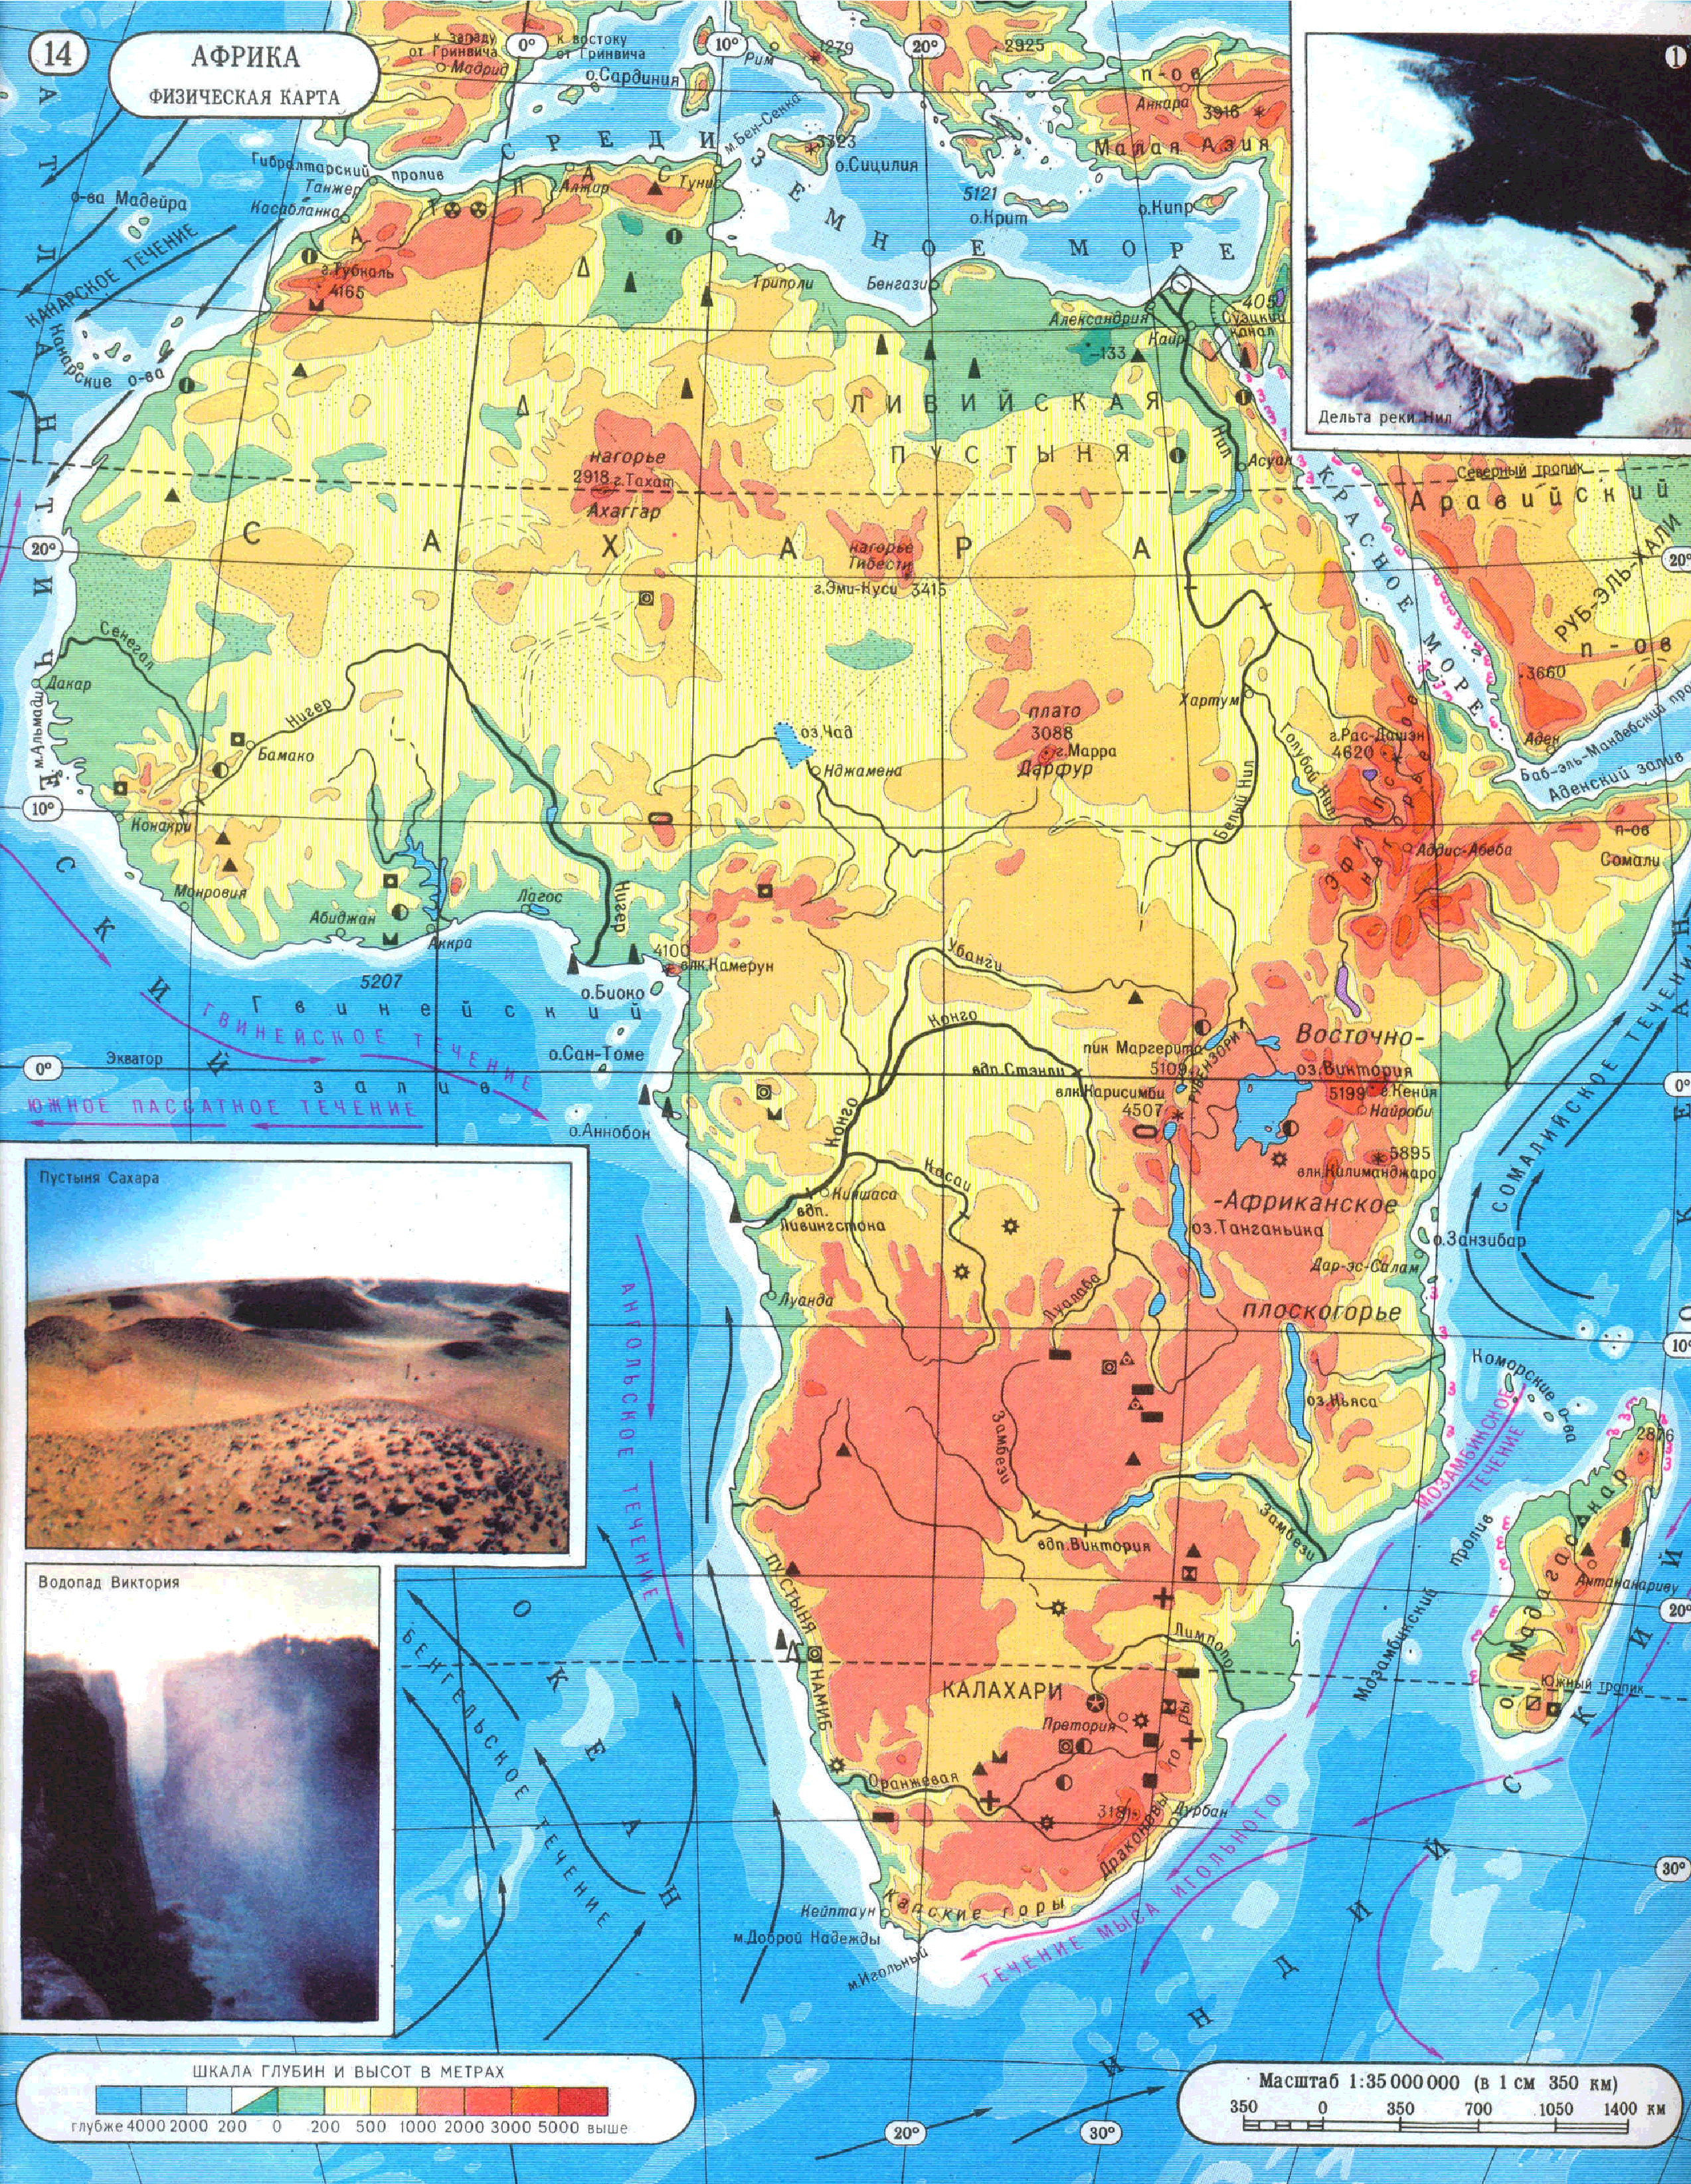 Атлас на карте африки. Физическая карта Африки 7 класс атлас. Карта рельефа Африки 7 класс. Карта Африки географическая 7 класс атлас. Атлас 7 класс география Африка физическая карта.